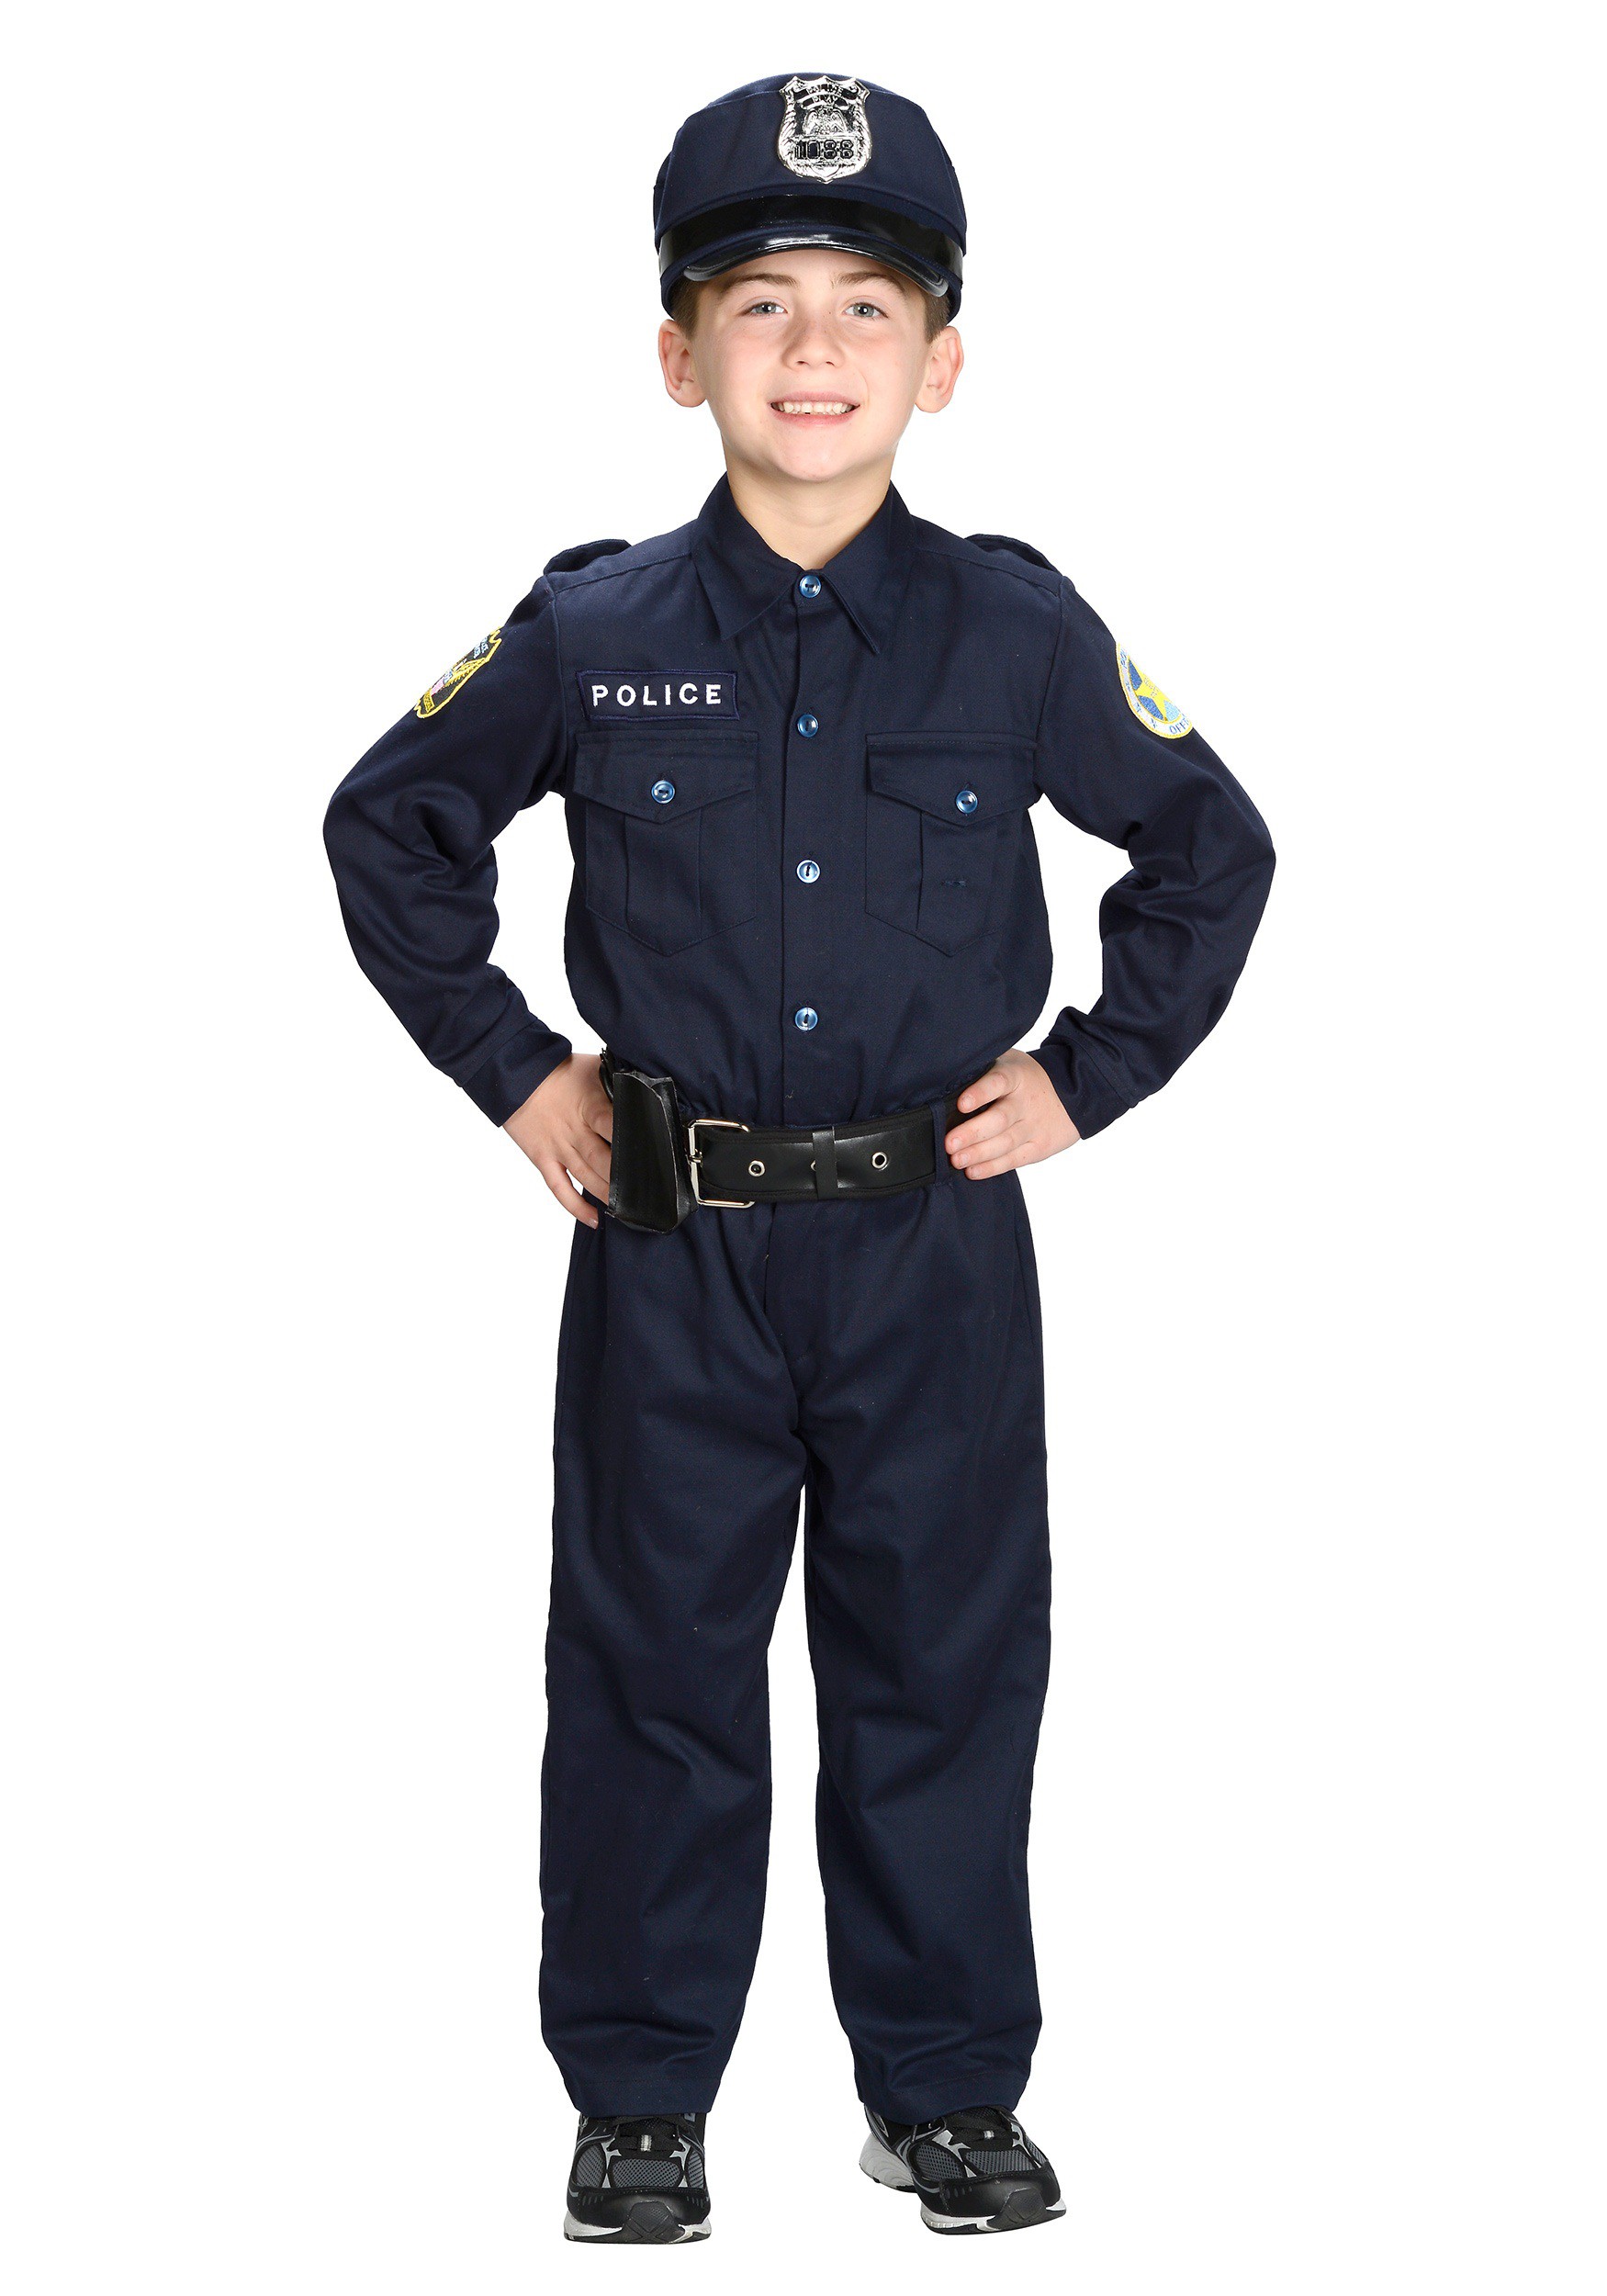 Award Winning Deluxe Police Dress Up Childrens Costume Set 